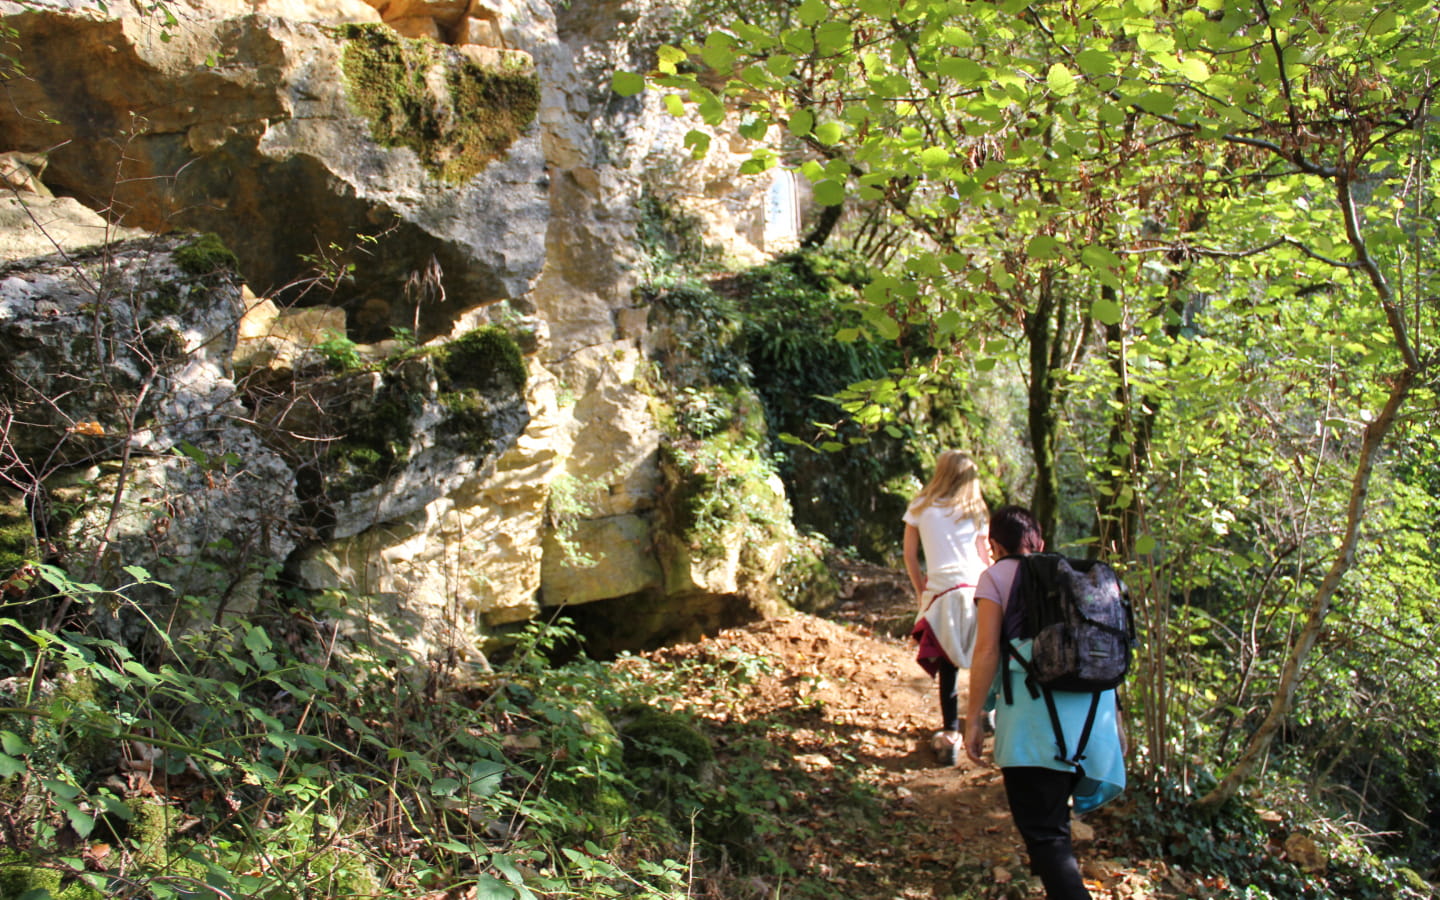 Grotte de la Roche